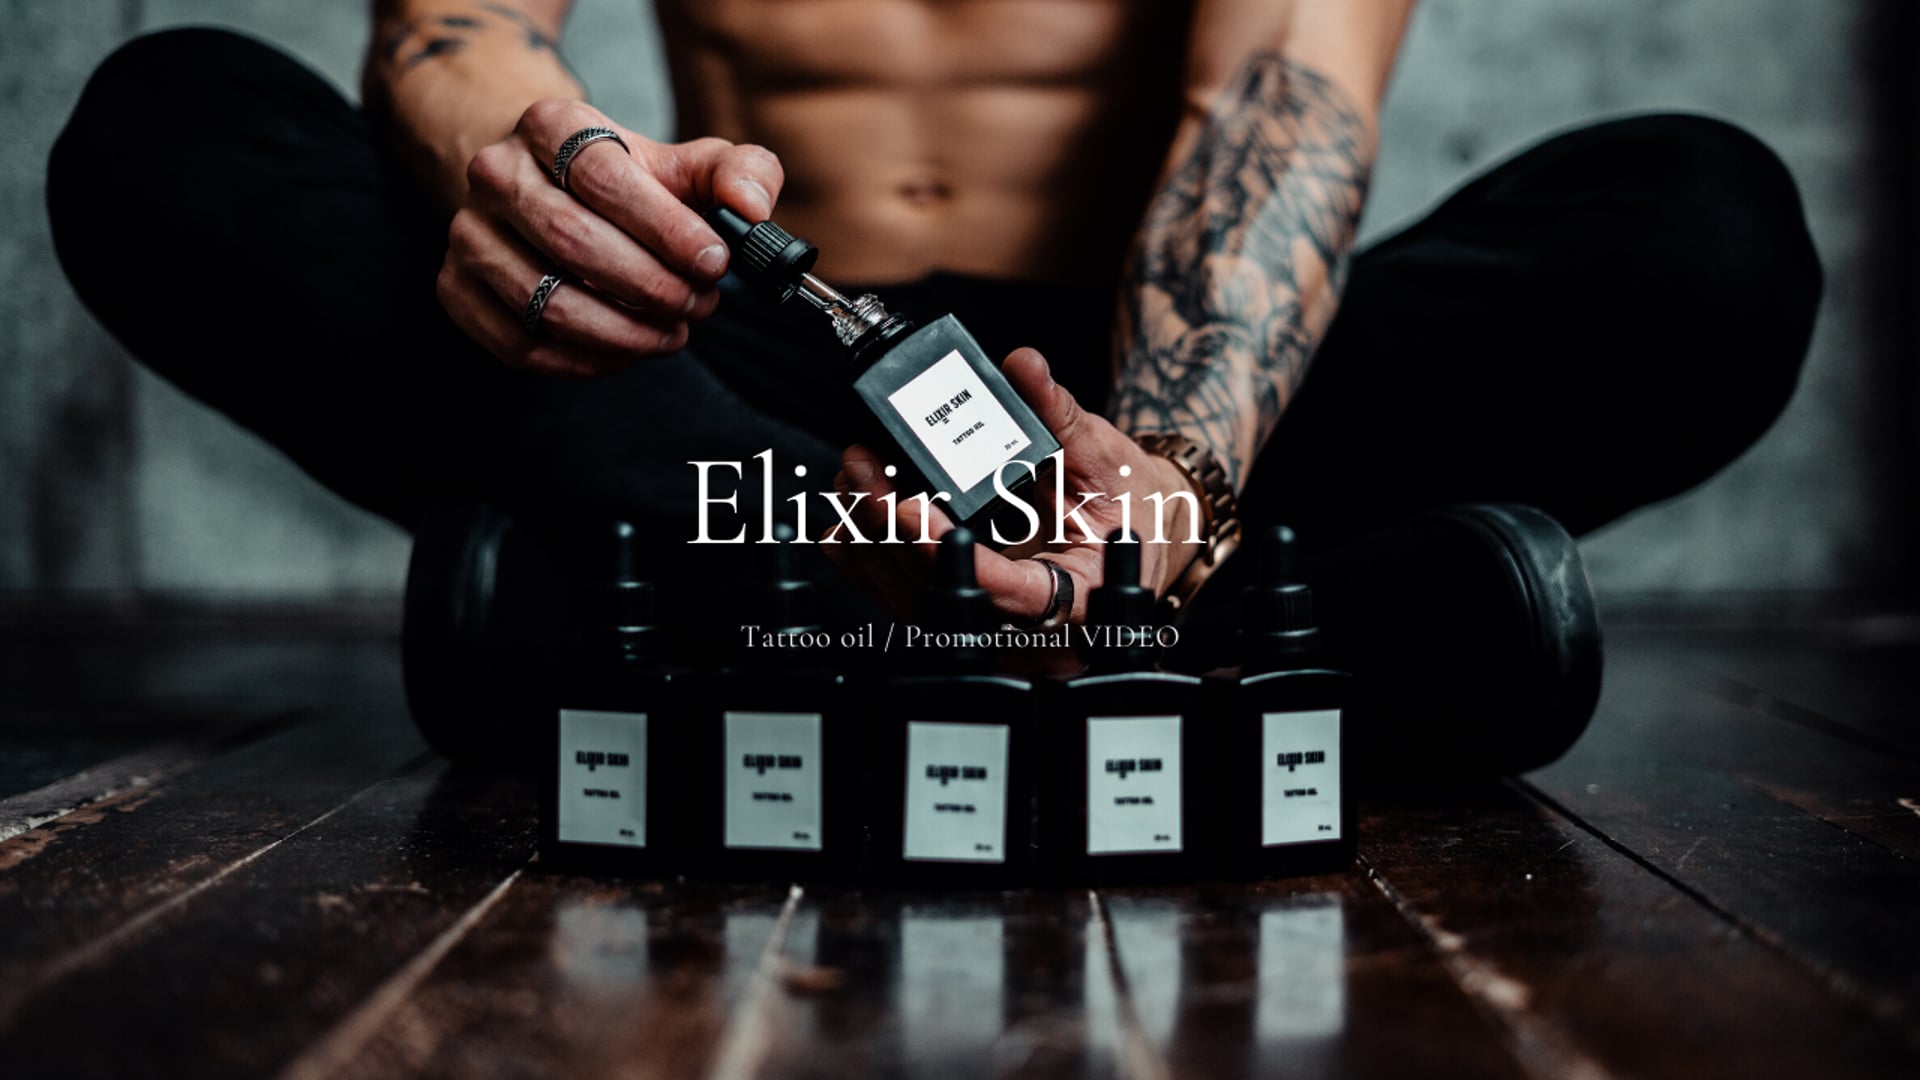 ELIXIR SKIN / Tattoo Oil / Promotional Video